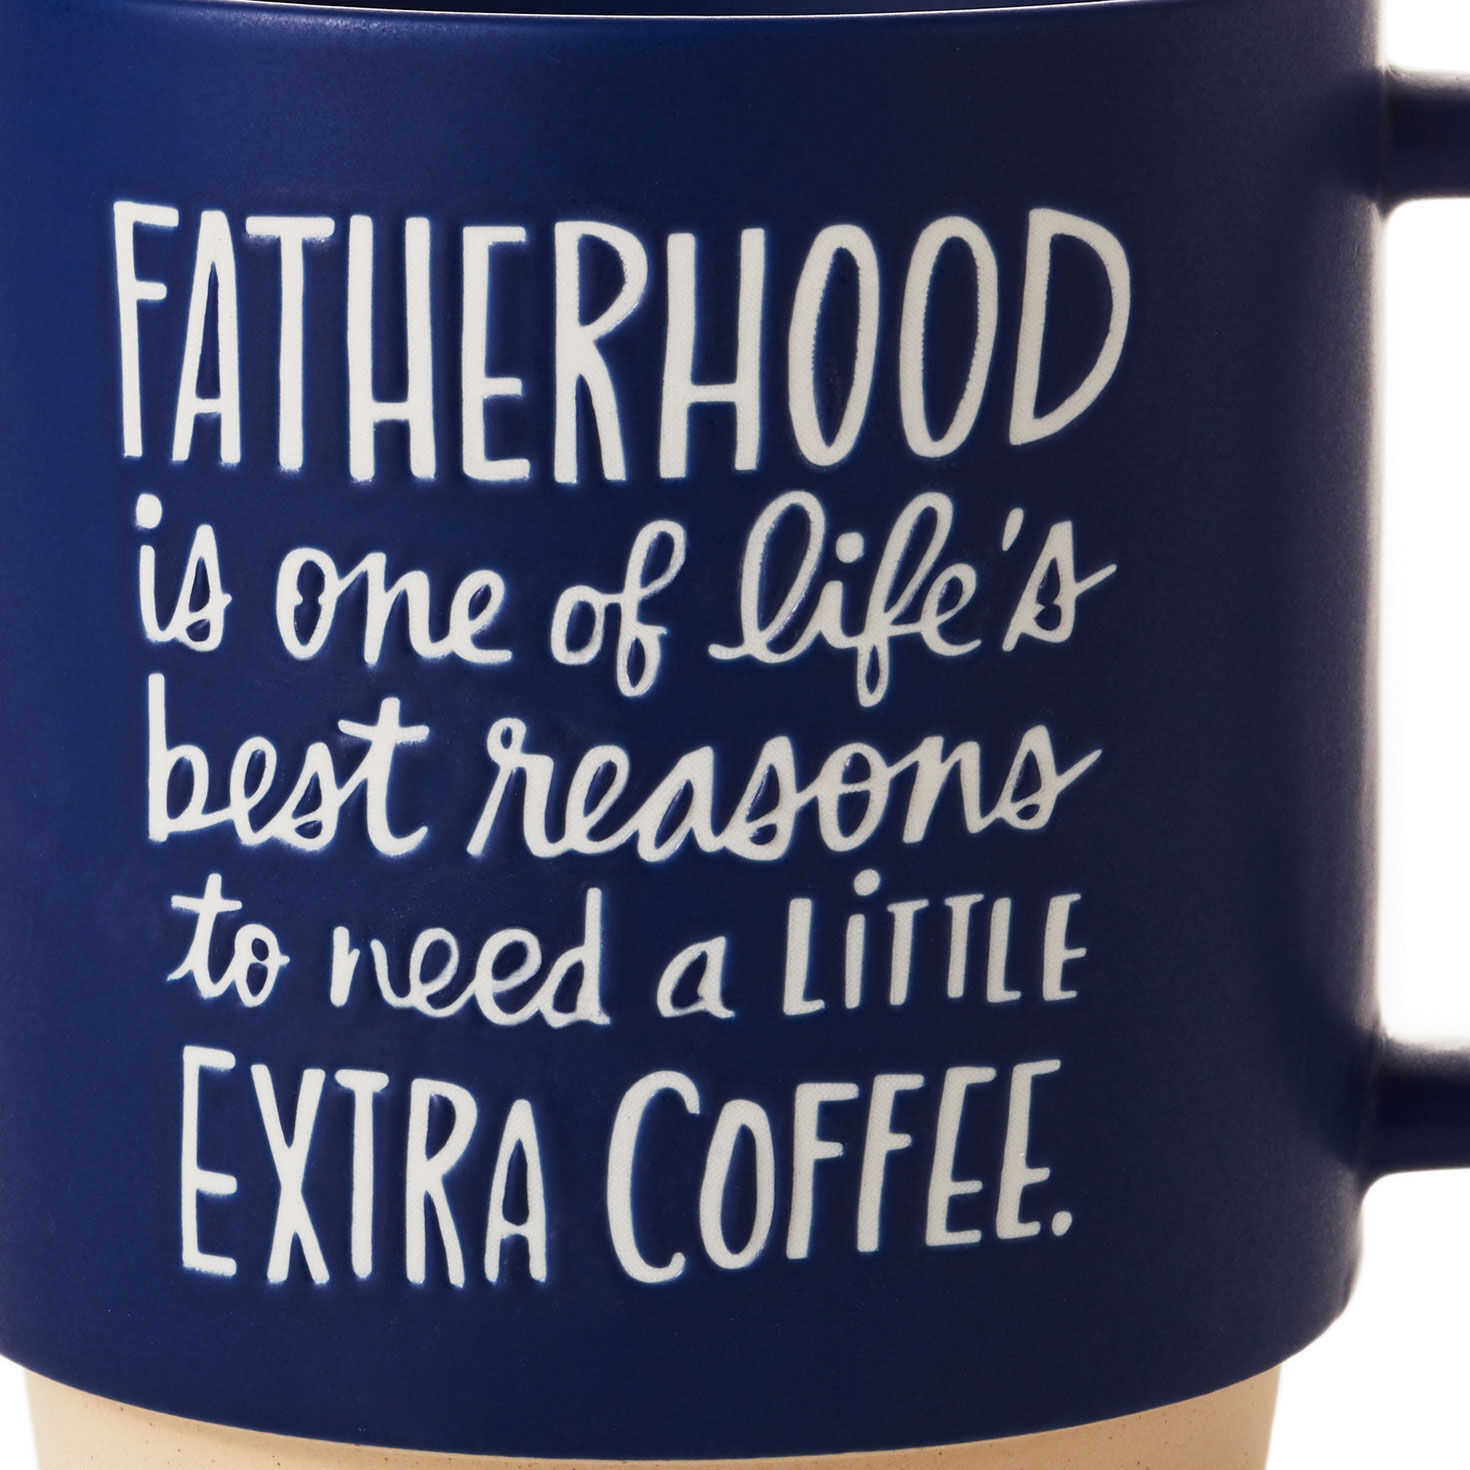 Fatherhood Extra Coffee Funny Mug, 16 oz. for only USD 16.99 | Hallmark